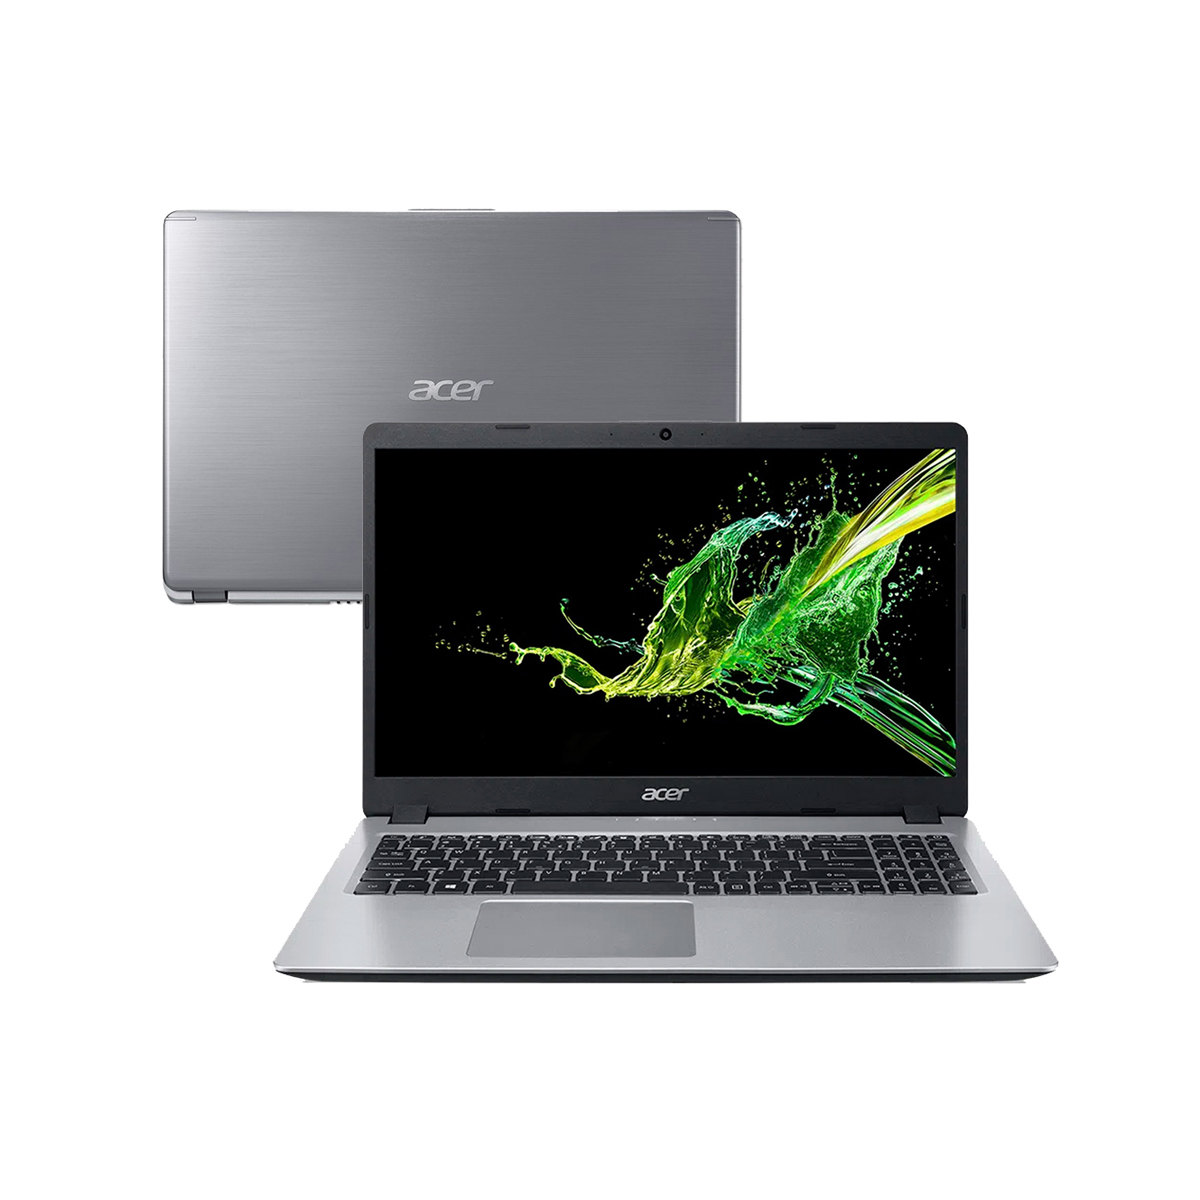 Notebook Acer A515 Core I5 8265u Memoria 8gb Ddr4 Hd 1tb Tela 15.6' Led Hd Windows 10 Home